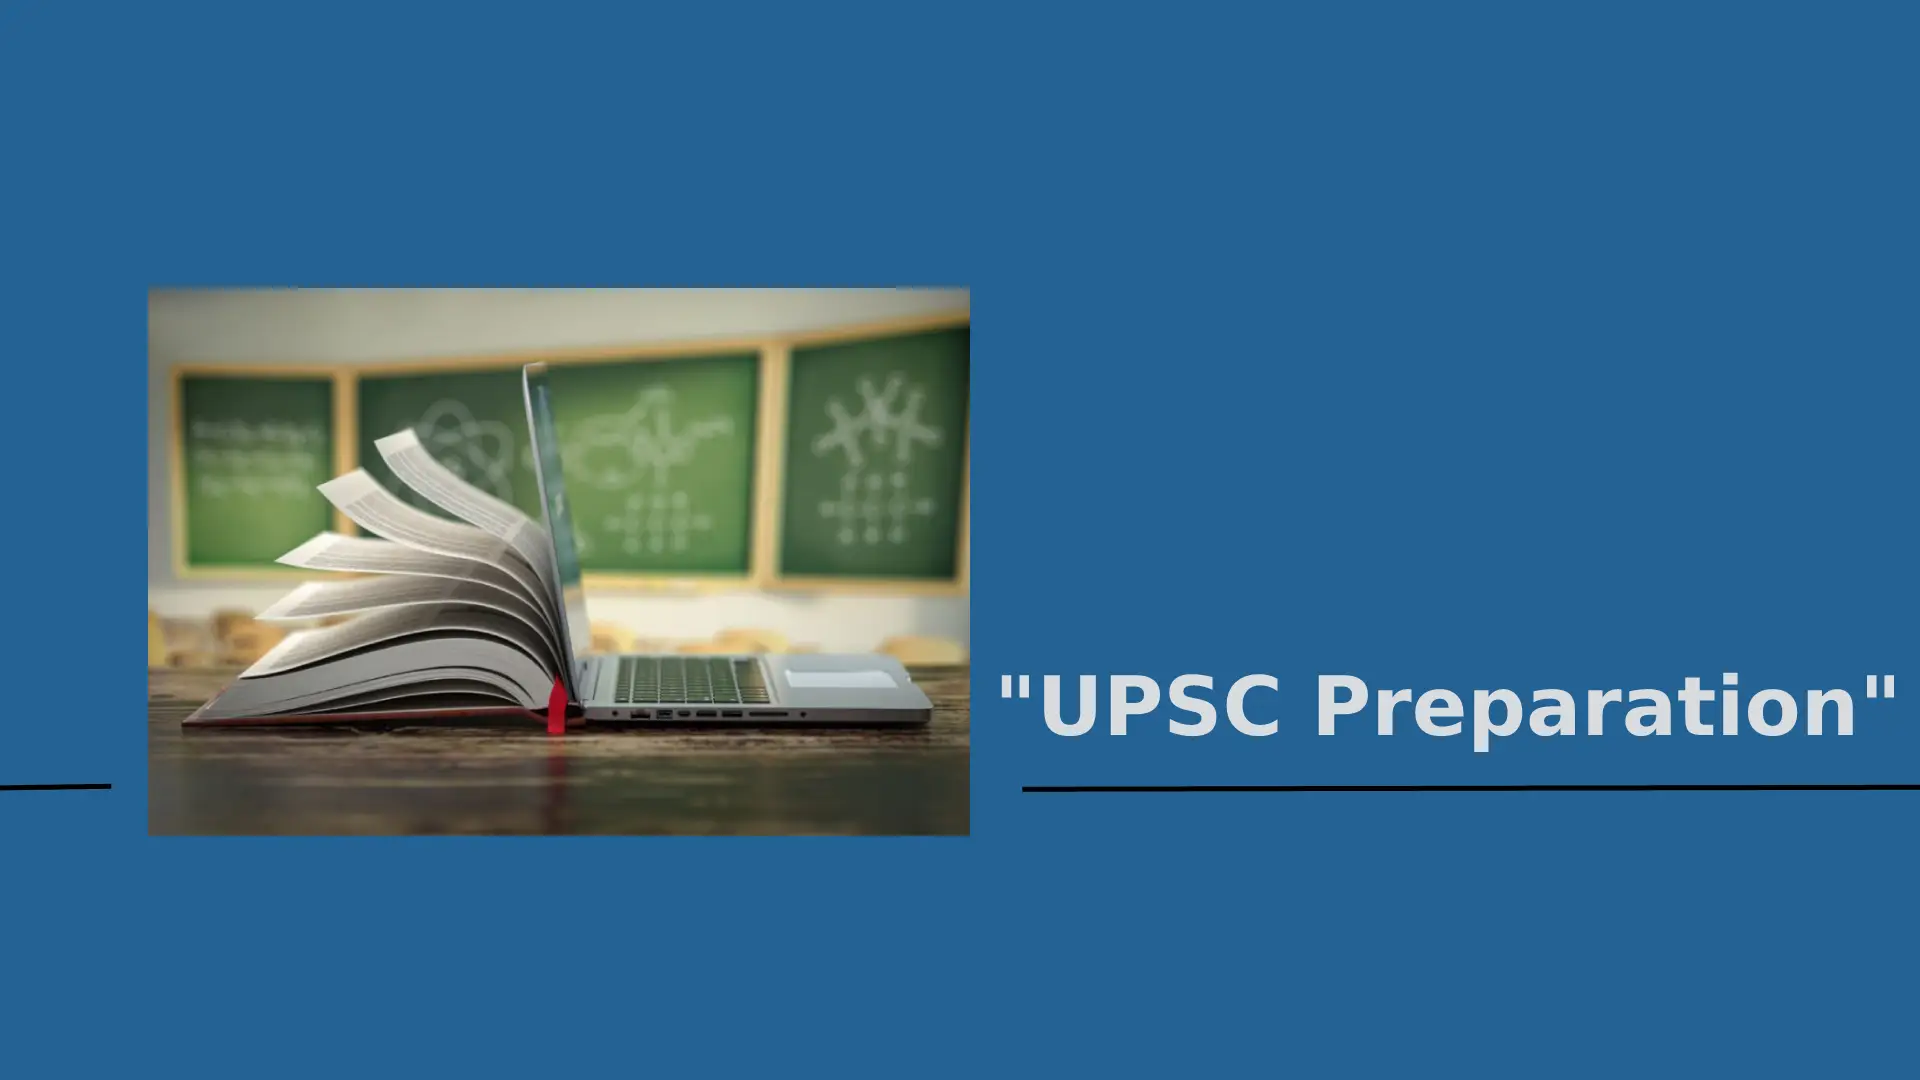 UPSC Preparetion at Home